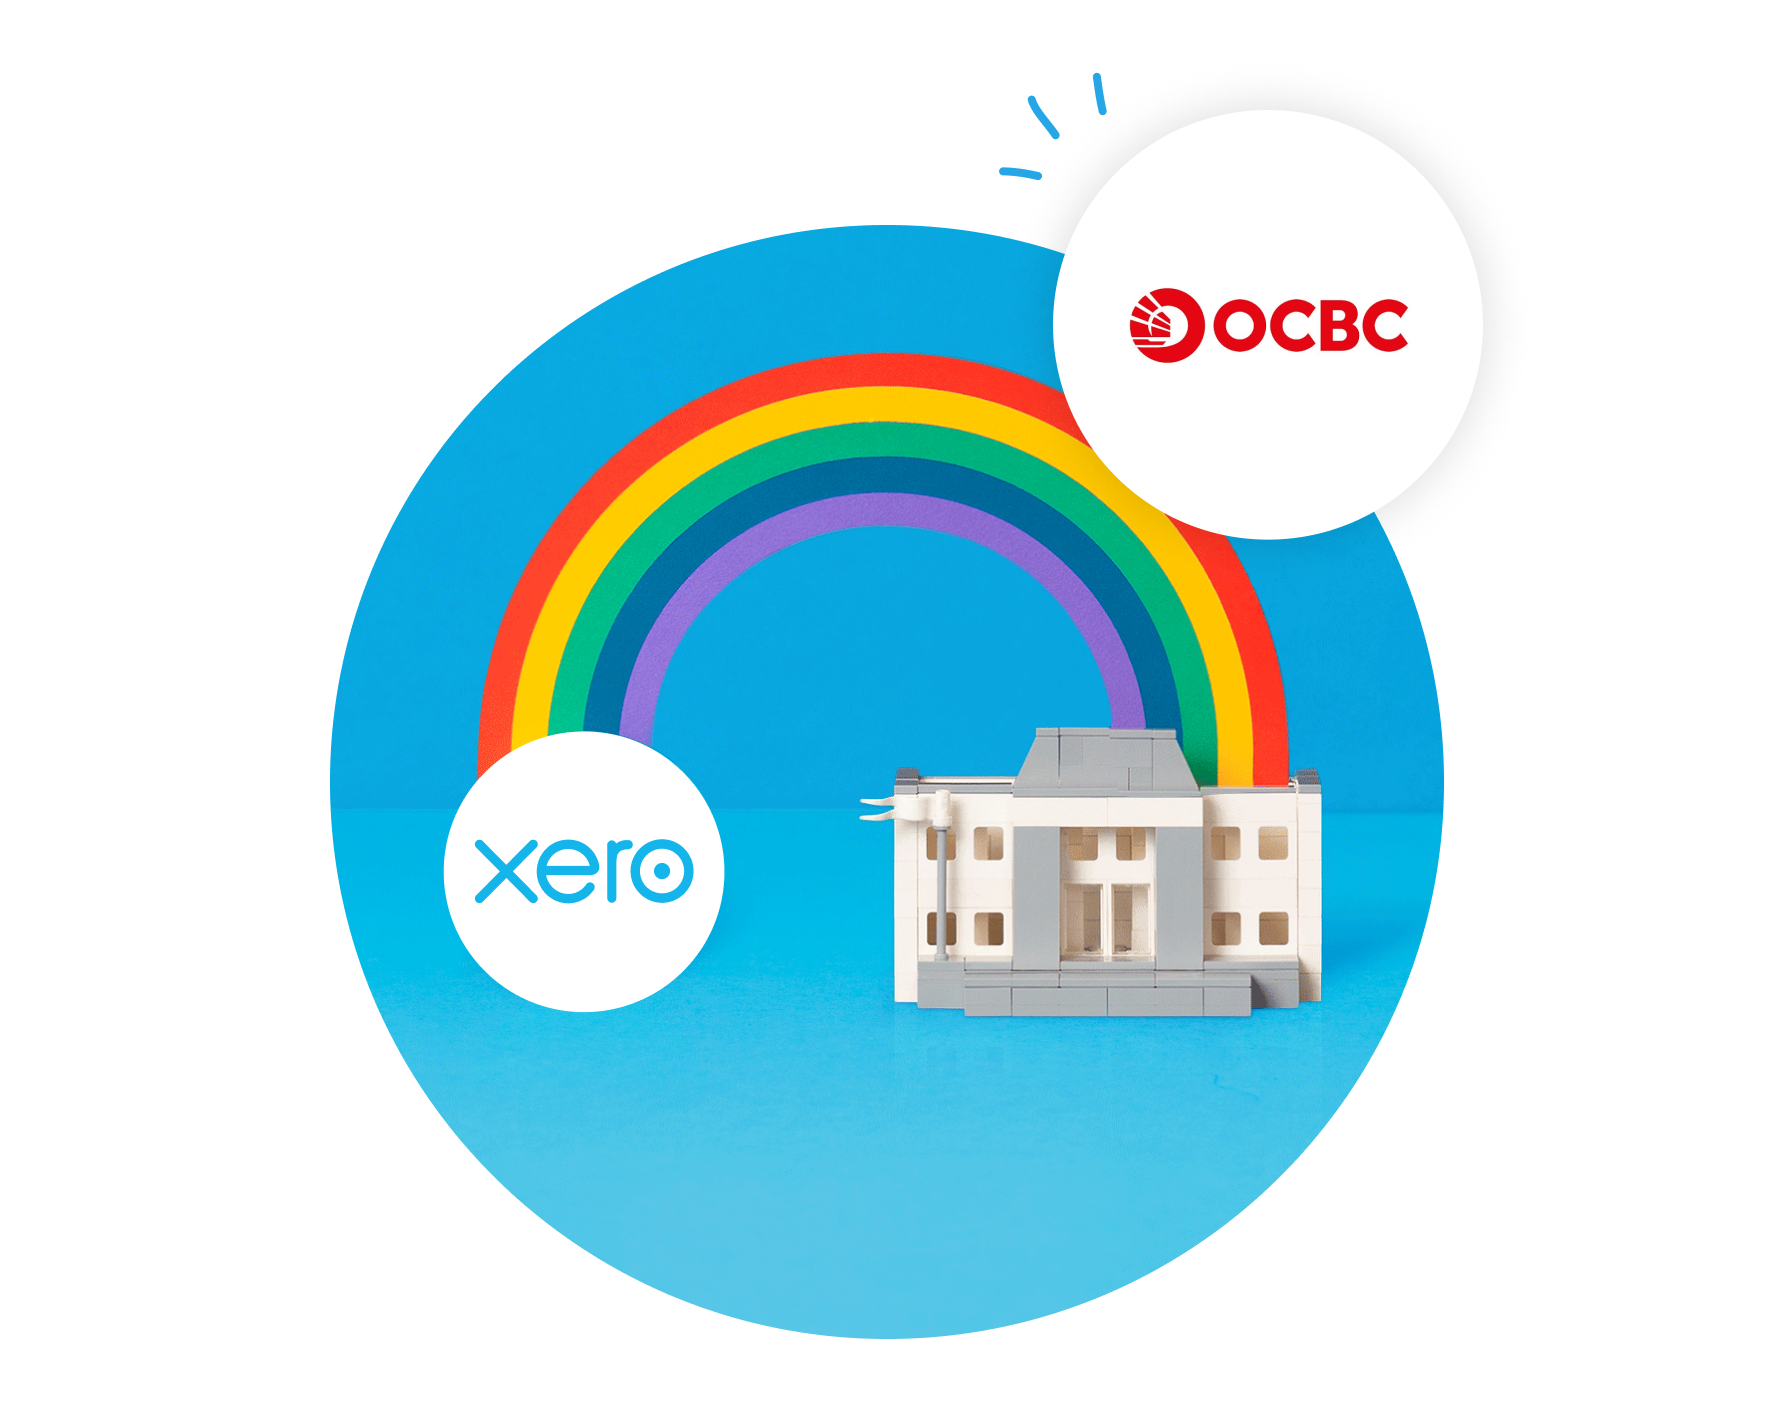 Image of Rainbow connecting the Xero logo and OCBC logo